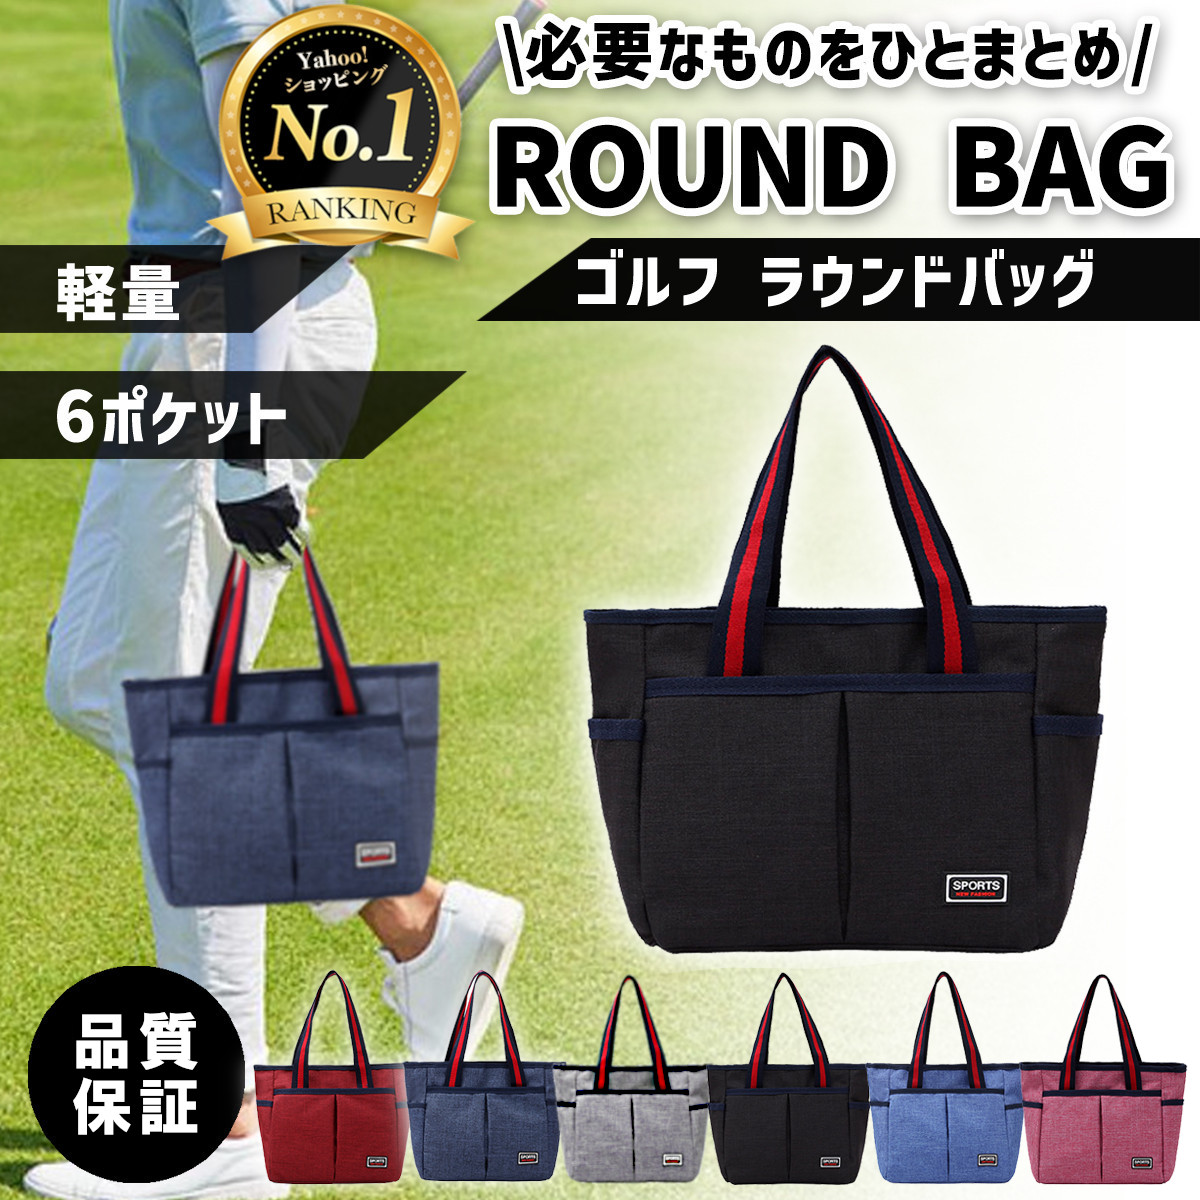  round bag Golf men's lady's Cart bag tote bag Golf bag lunch bag stylish pouch 